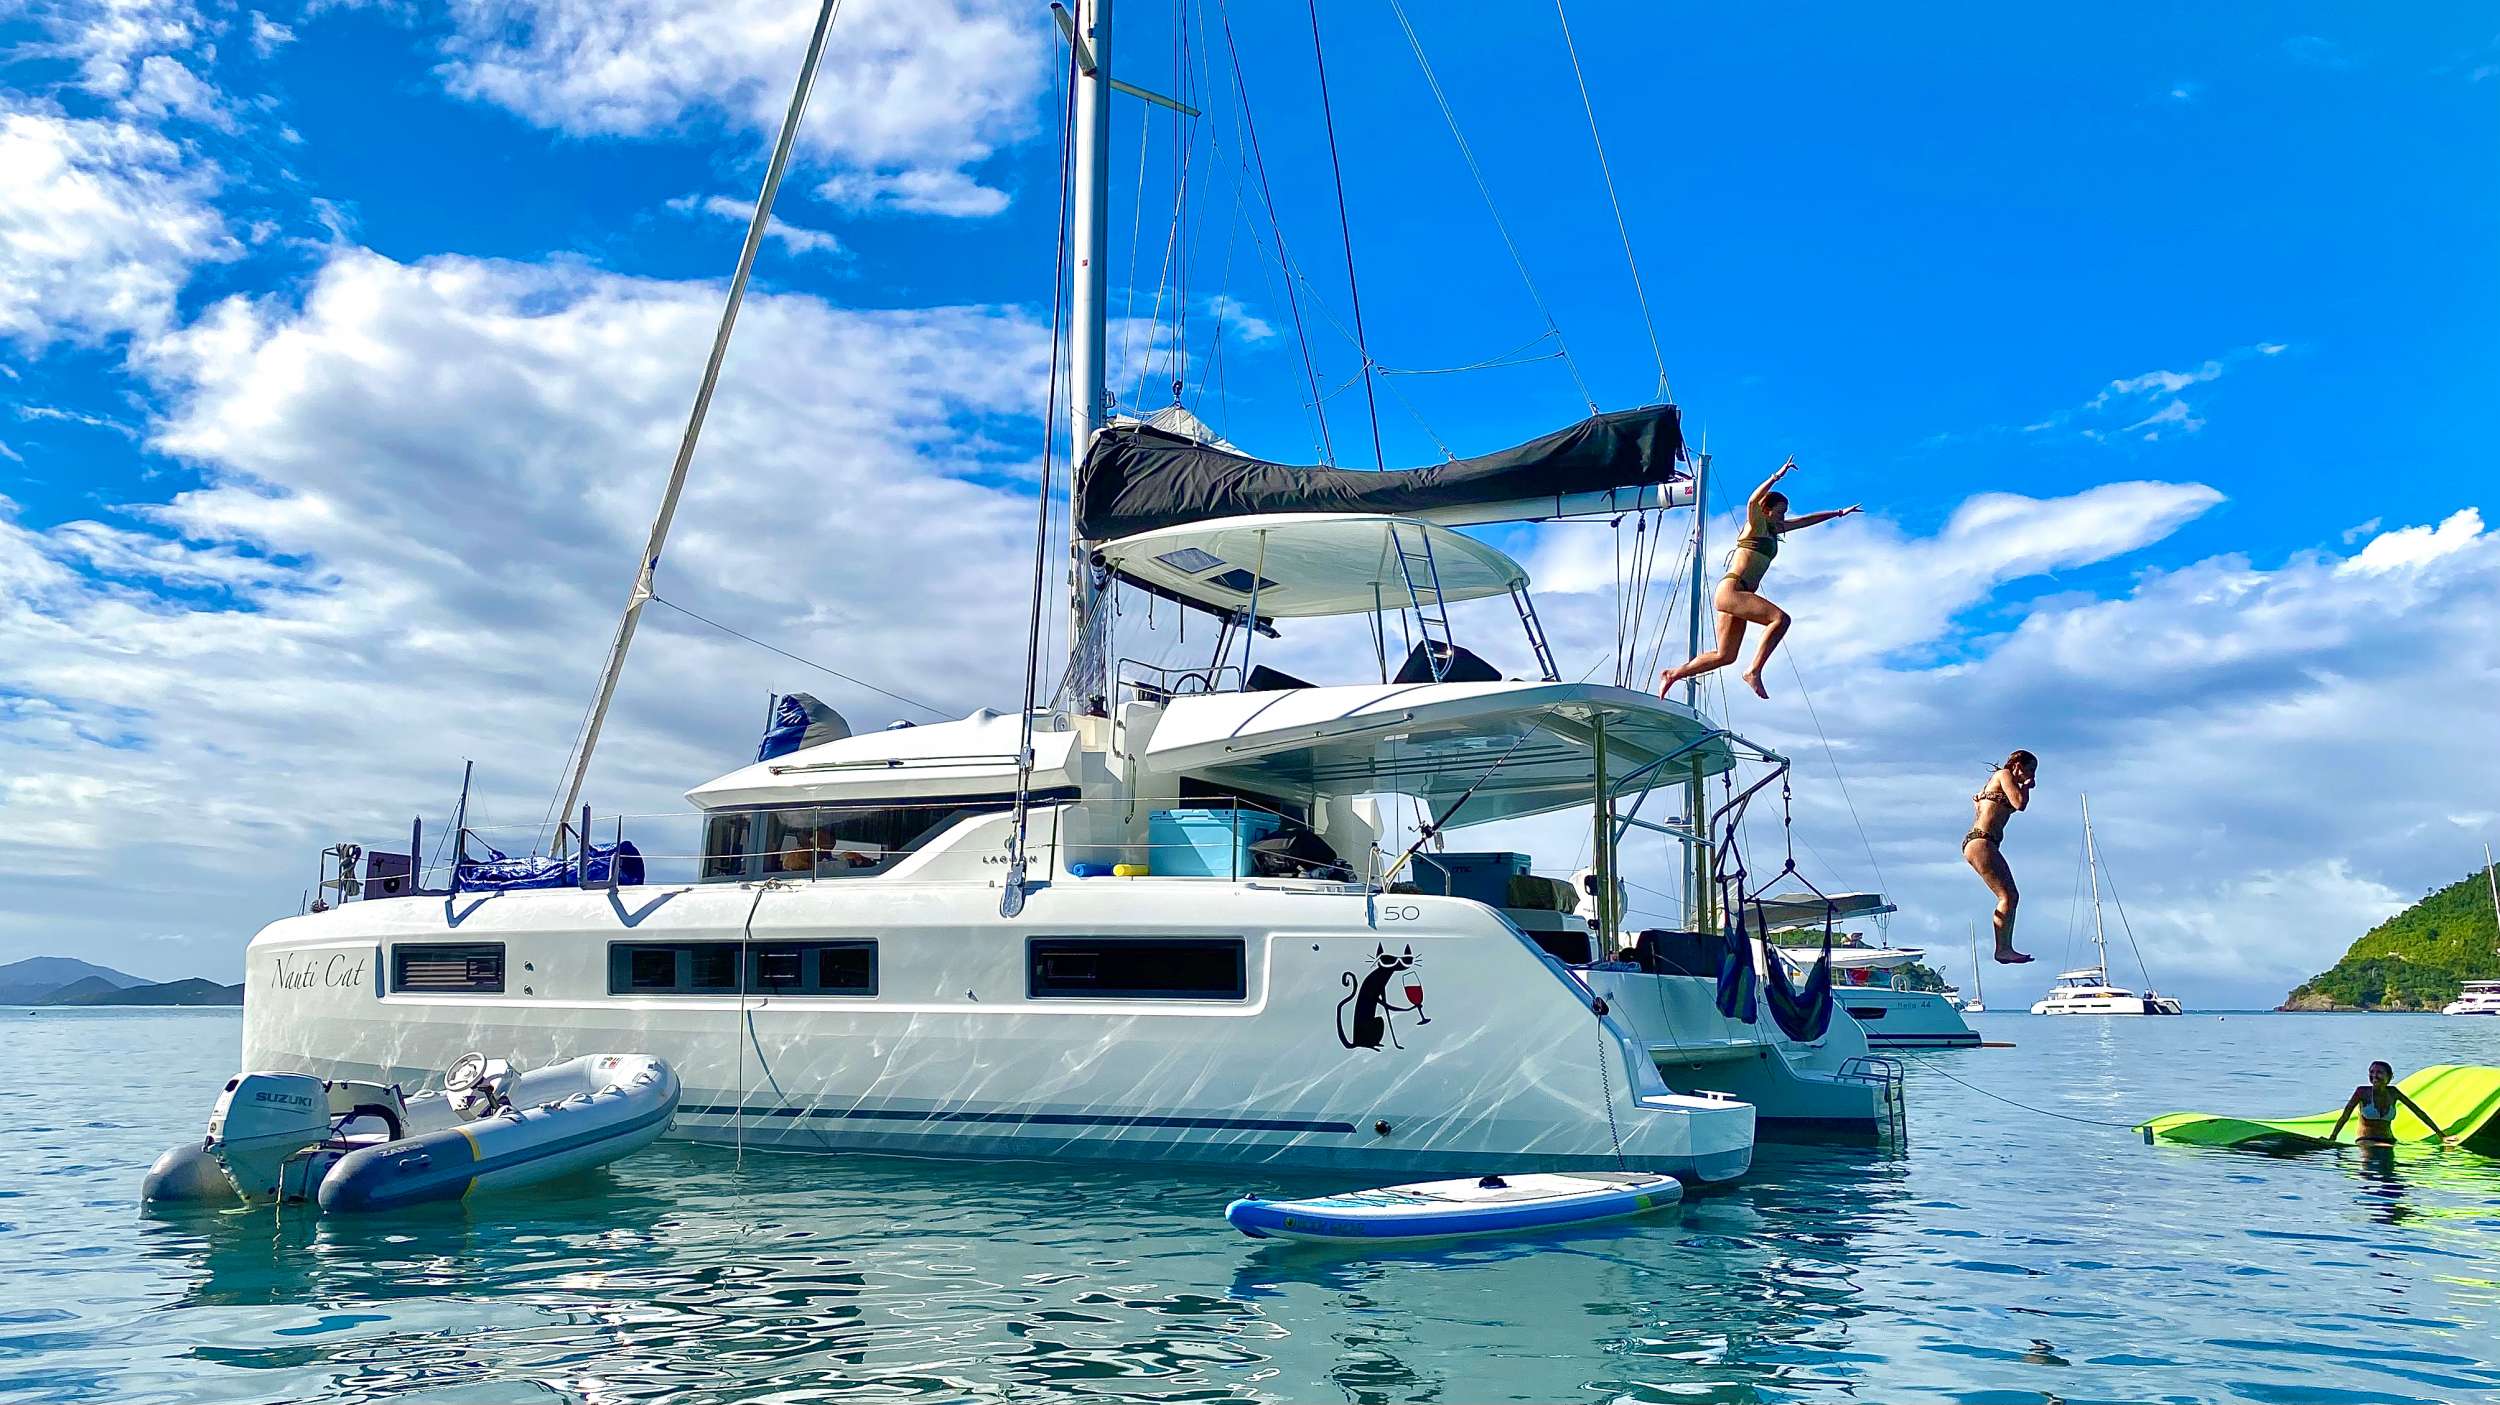 NAUTI CAT - Yacht Charter Marsh Harbour & Boat hire in Bahamas 1